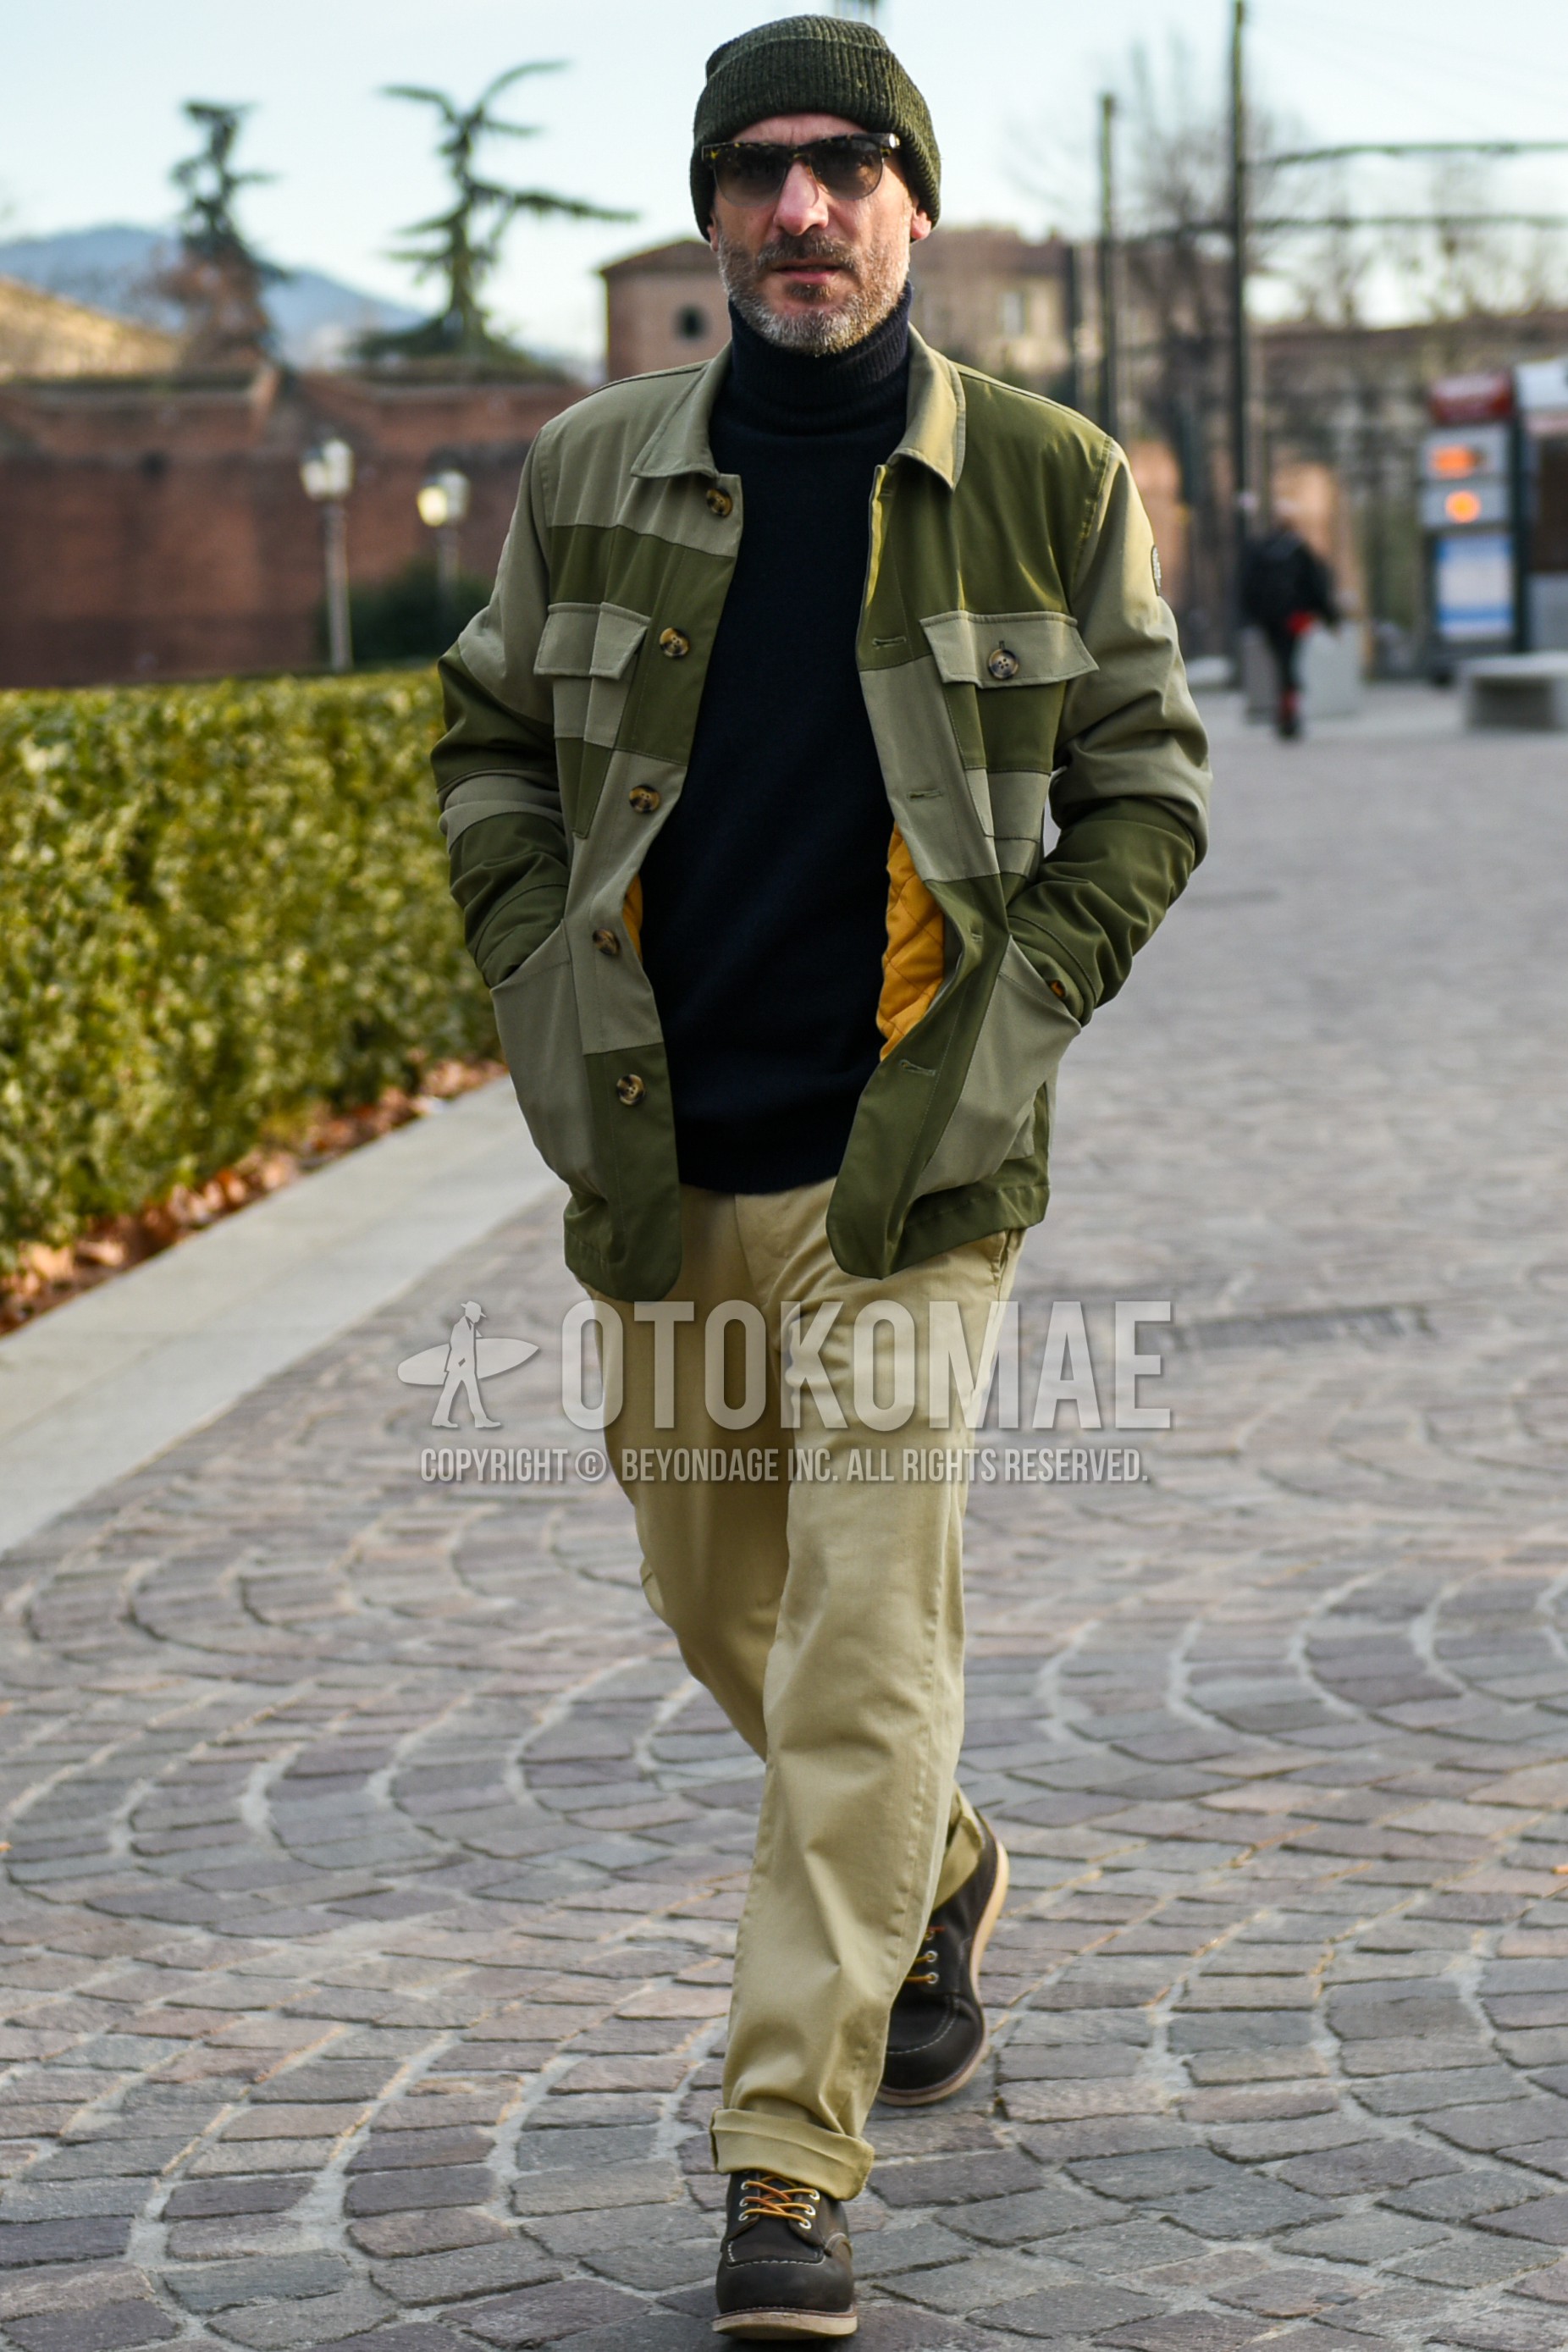 Men's autumn winter outfit with olive green plain knit cap, black plain sunglasses, olive green plain shirt jacket, black plain turtleneck knit, beige plain chinos, black work boots.